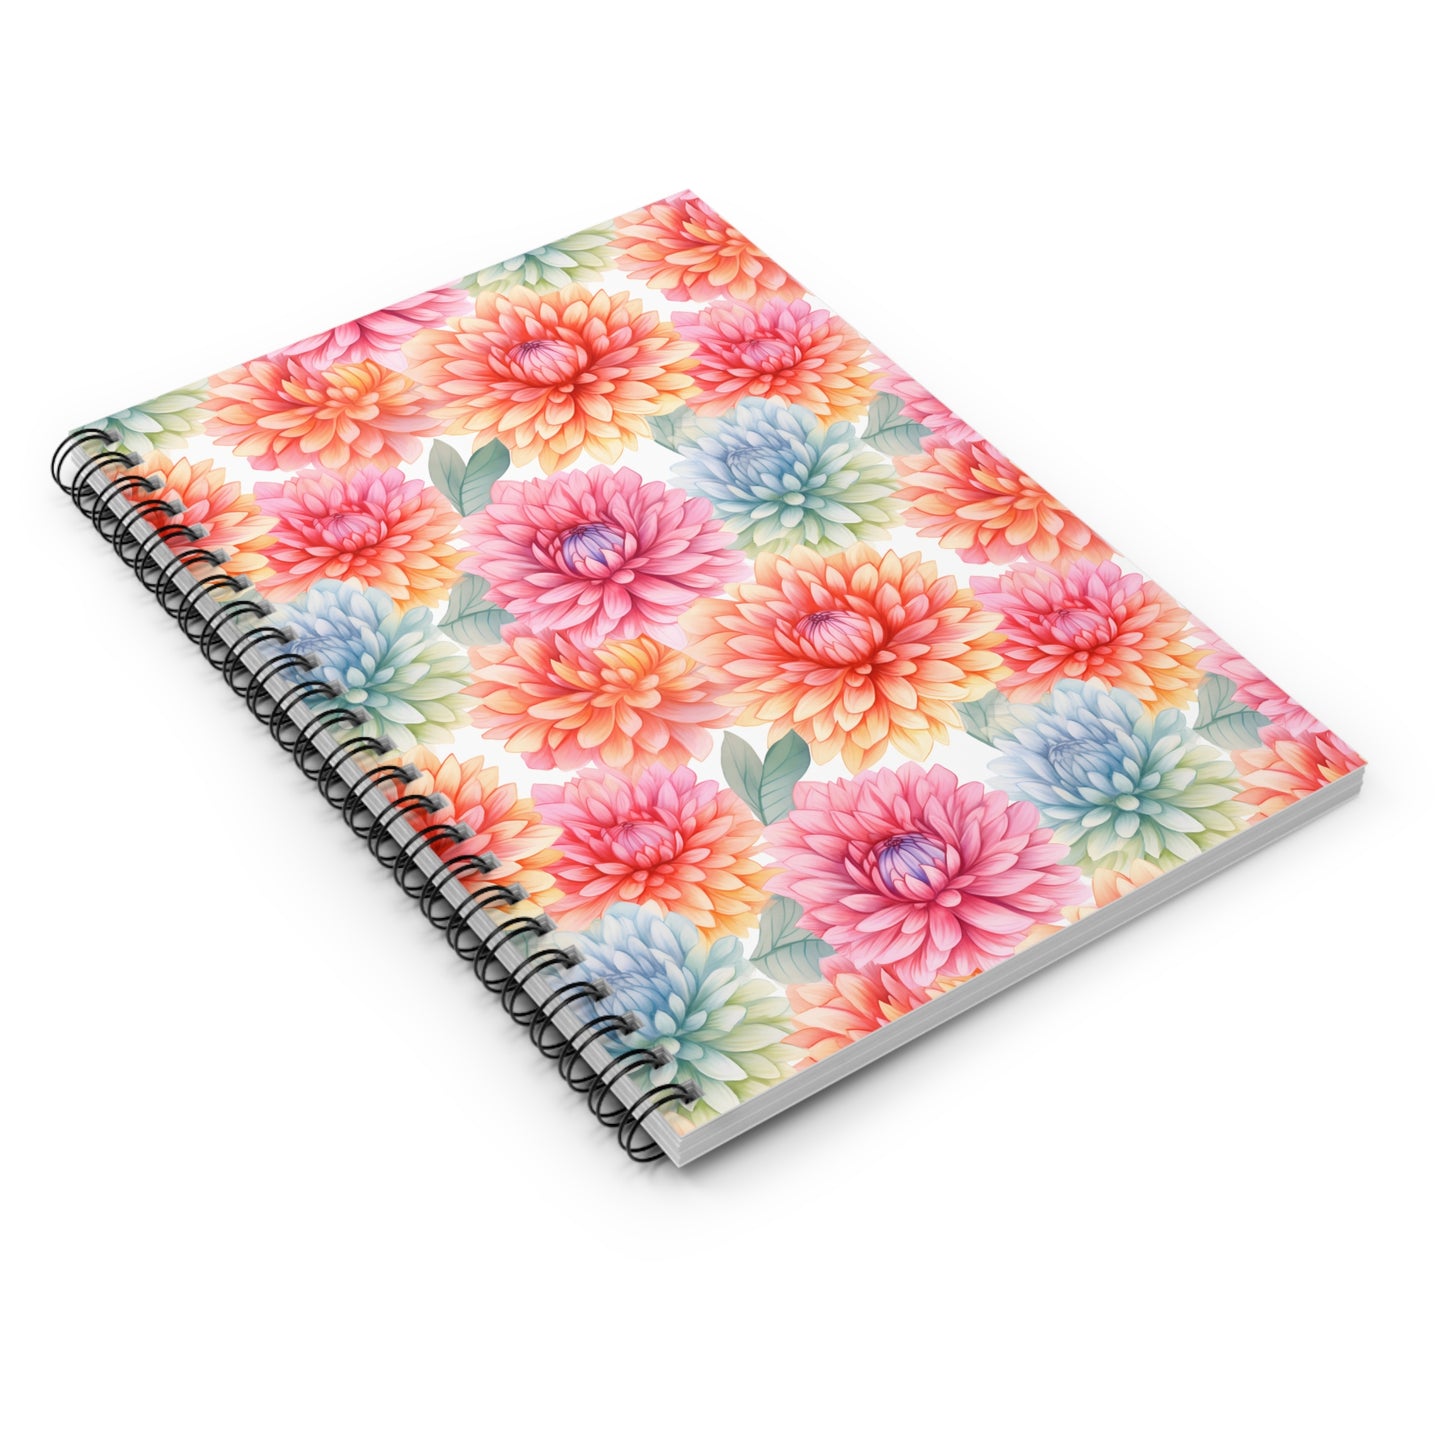 Pastel Blooms Chrysanthemum Spiral Notebook - Ruled Line (6" x 8")